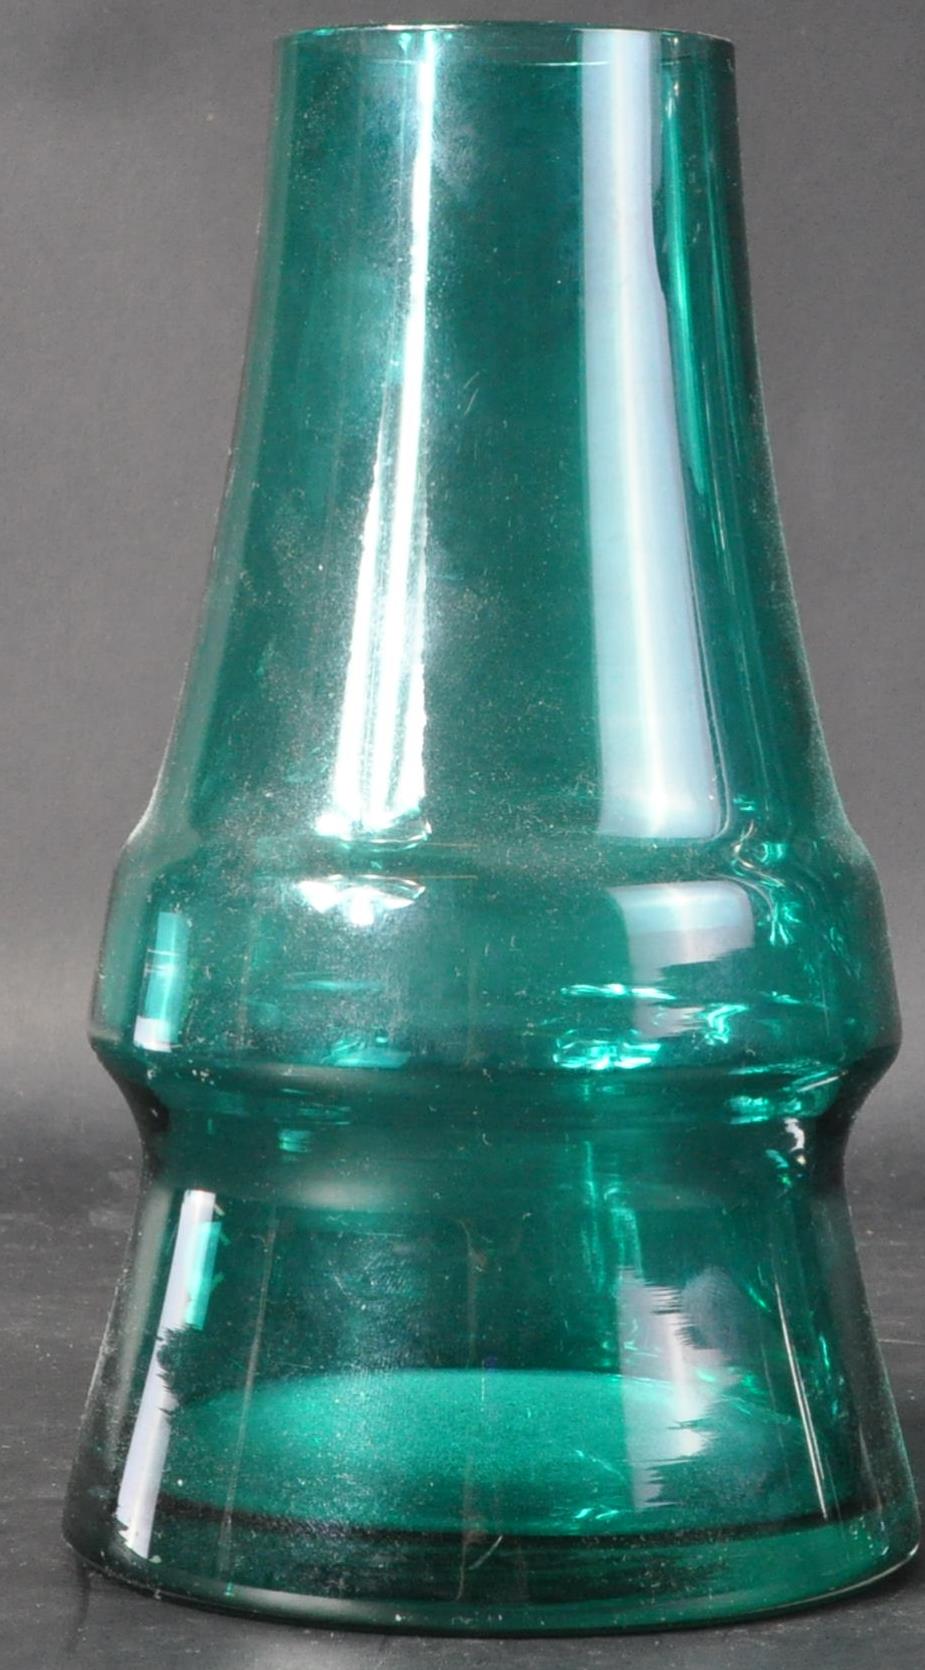 RIIHIMAKI - TWO RETRO MID CENTURY SCANDINAVIAN GLASS VASES - Image 2 of 6